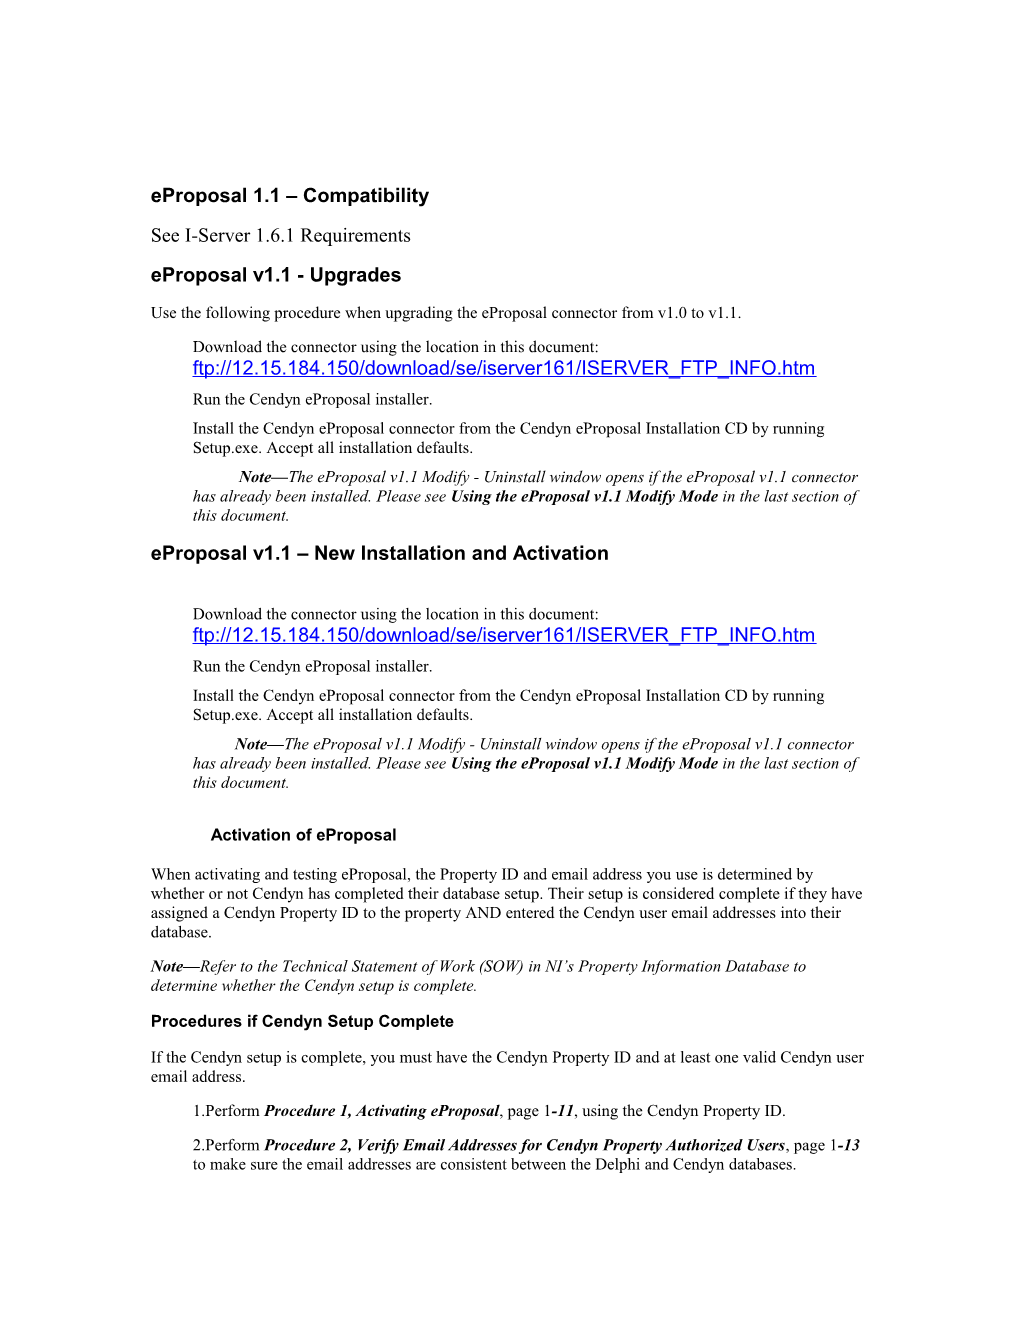 Eproposal 1.1 Compatibility